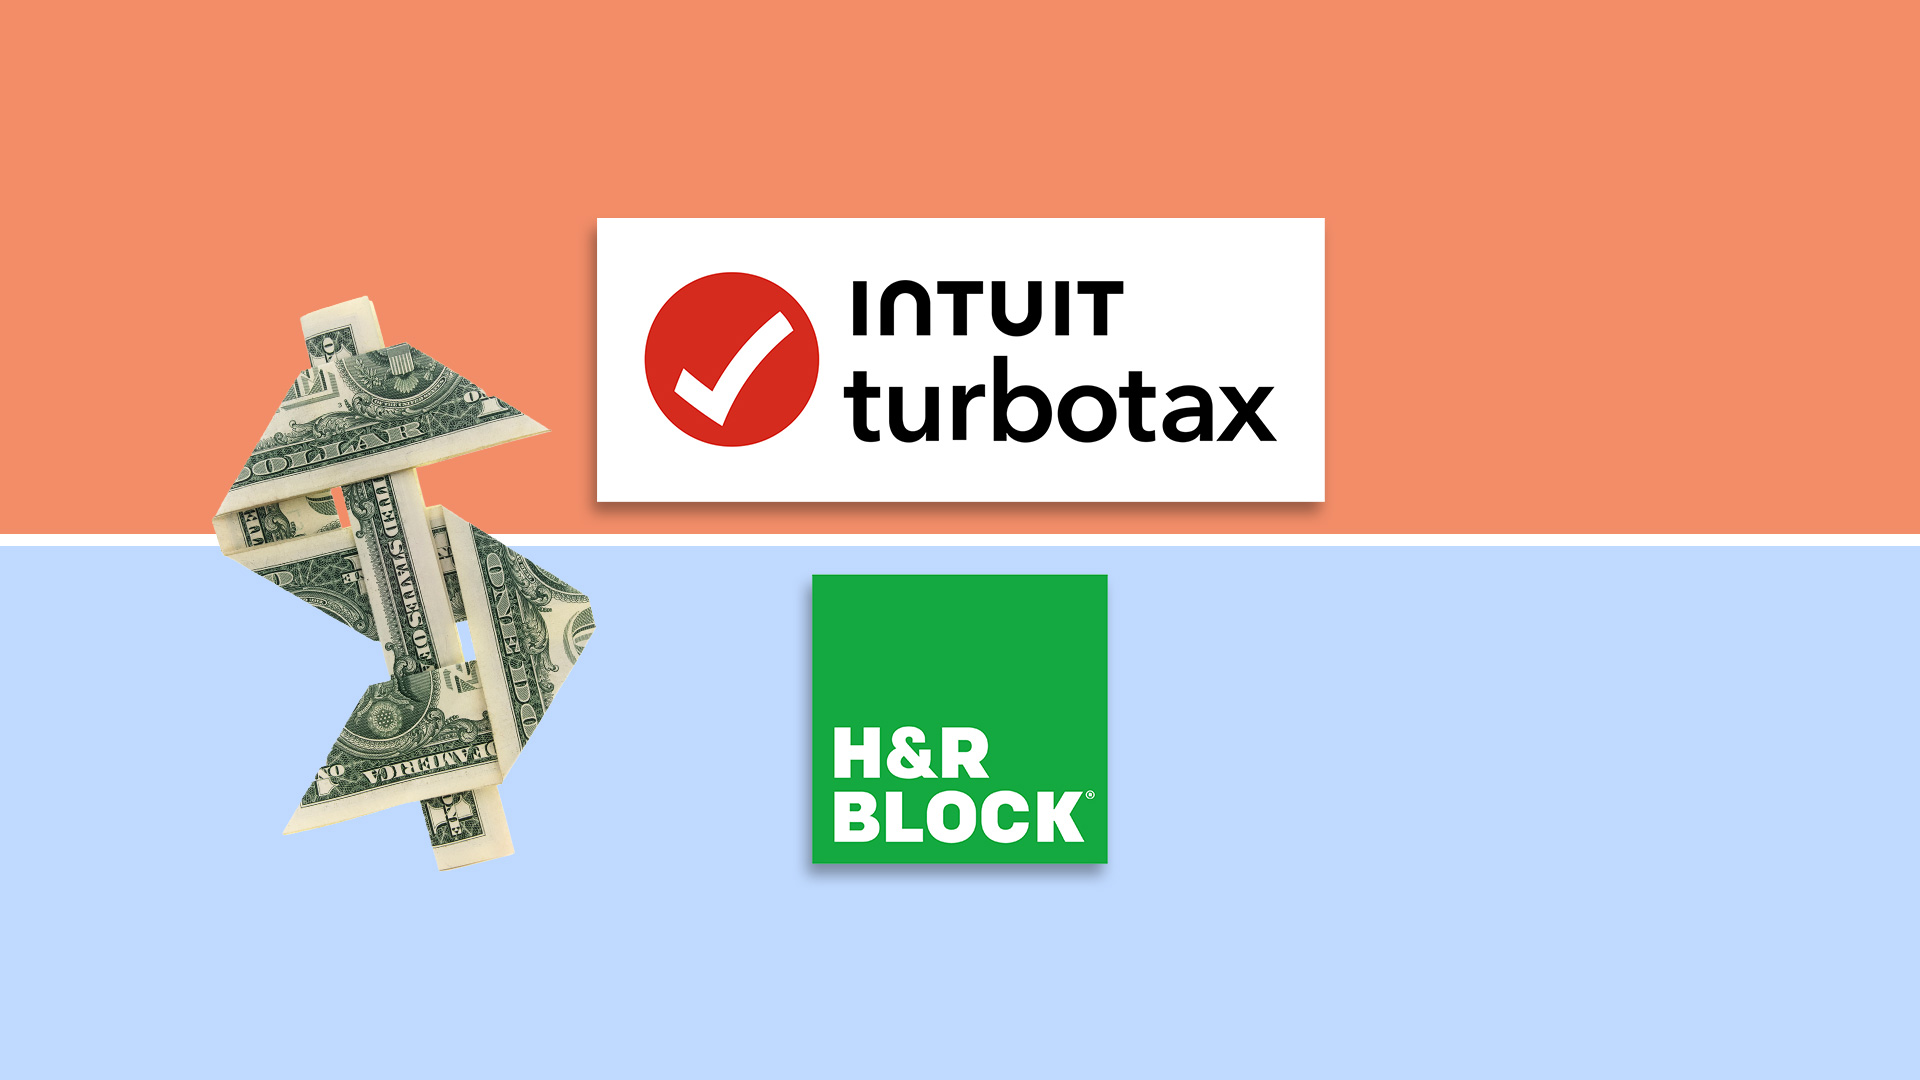 TurboTax vs HR Block